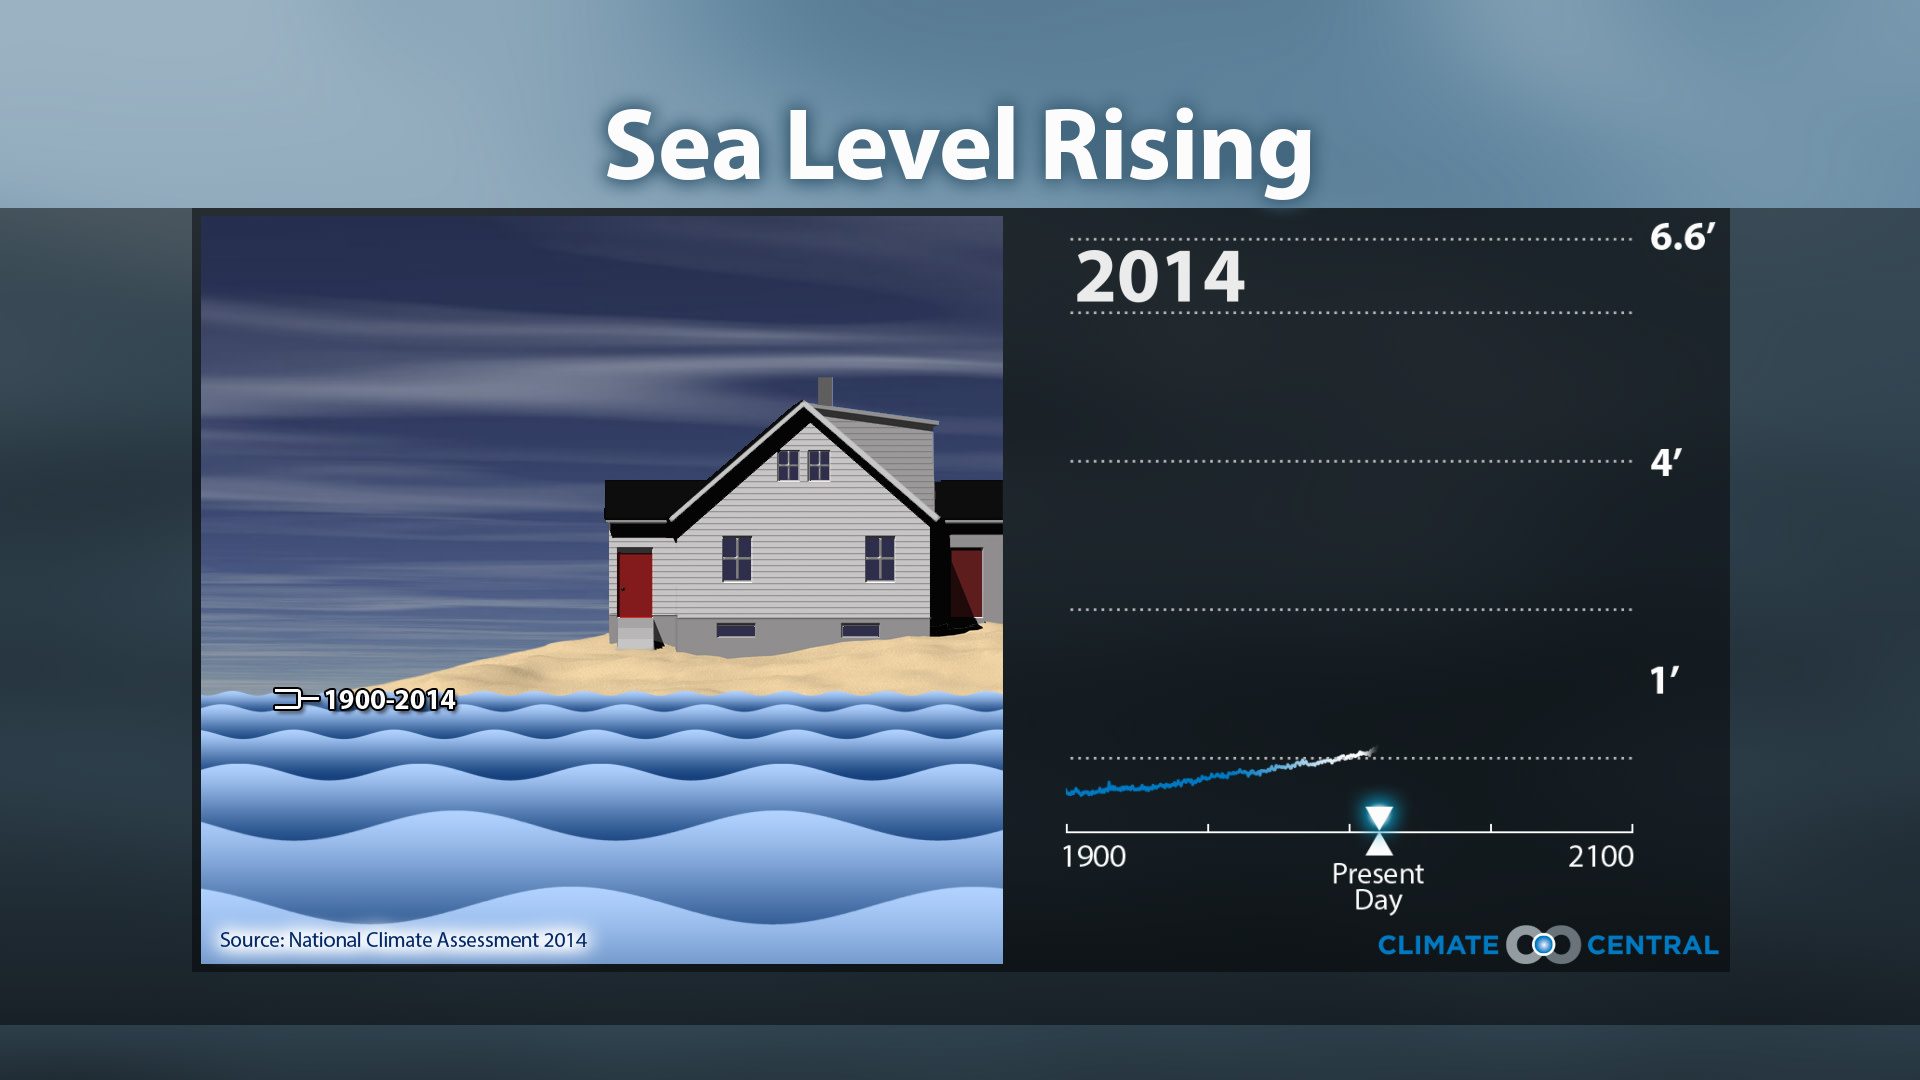 Set 3 - Sea Level Rise is Increasing Coastal Flood Risk